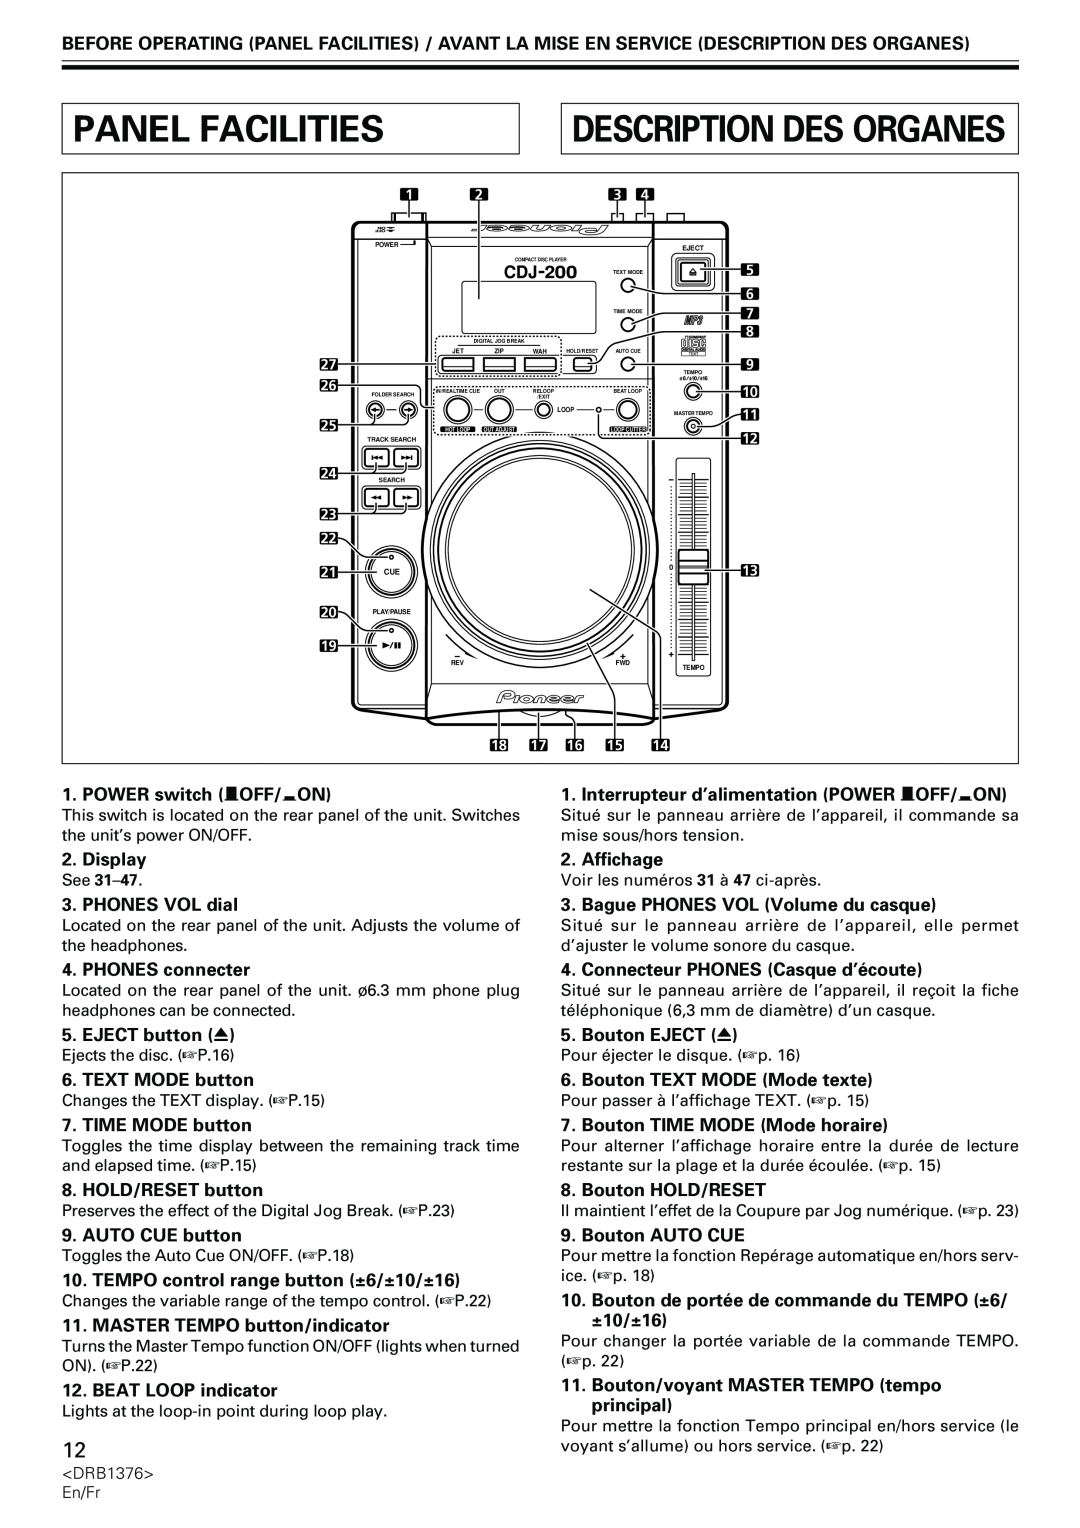 Pioneer CDJ-200 Panel Facilities, Description Des Organes, POWER switch —OFF/_ON, Display, Affichage, PHONES VOL dial 